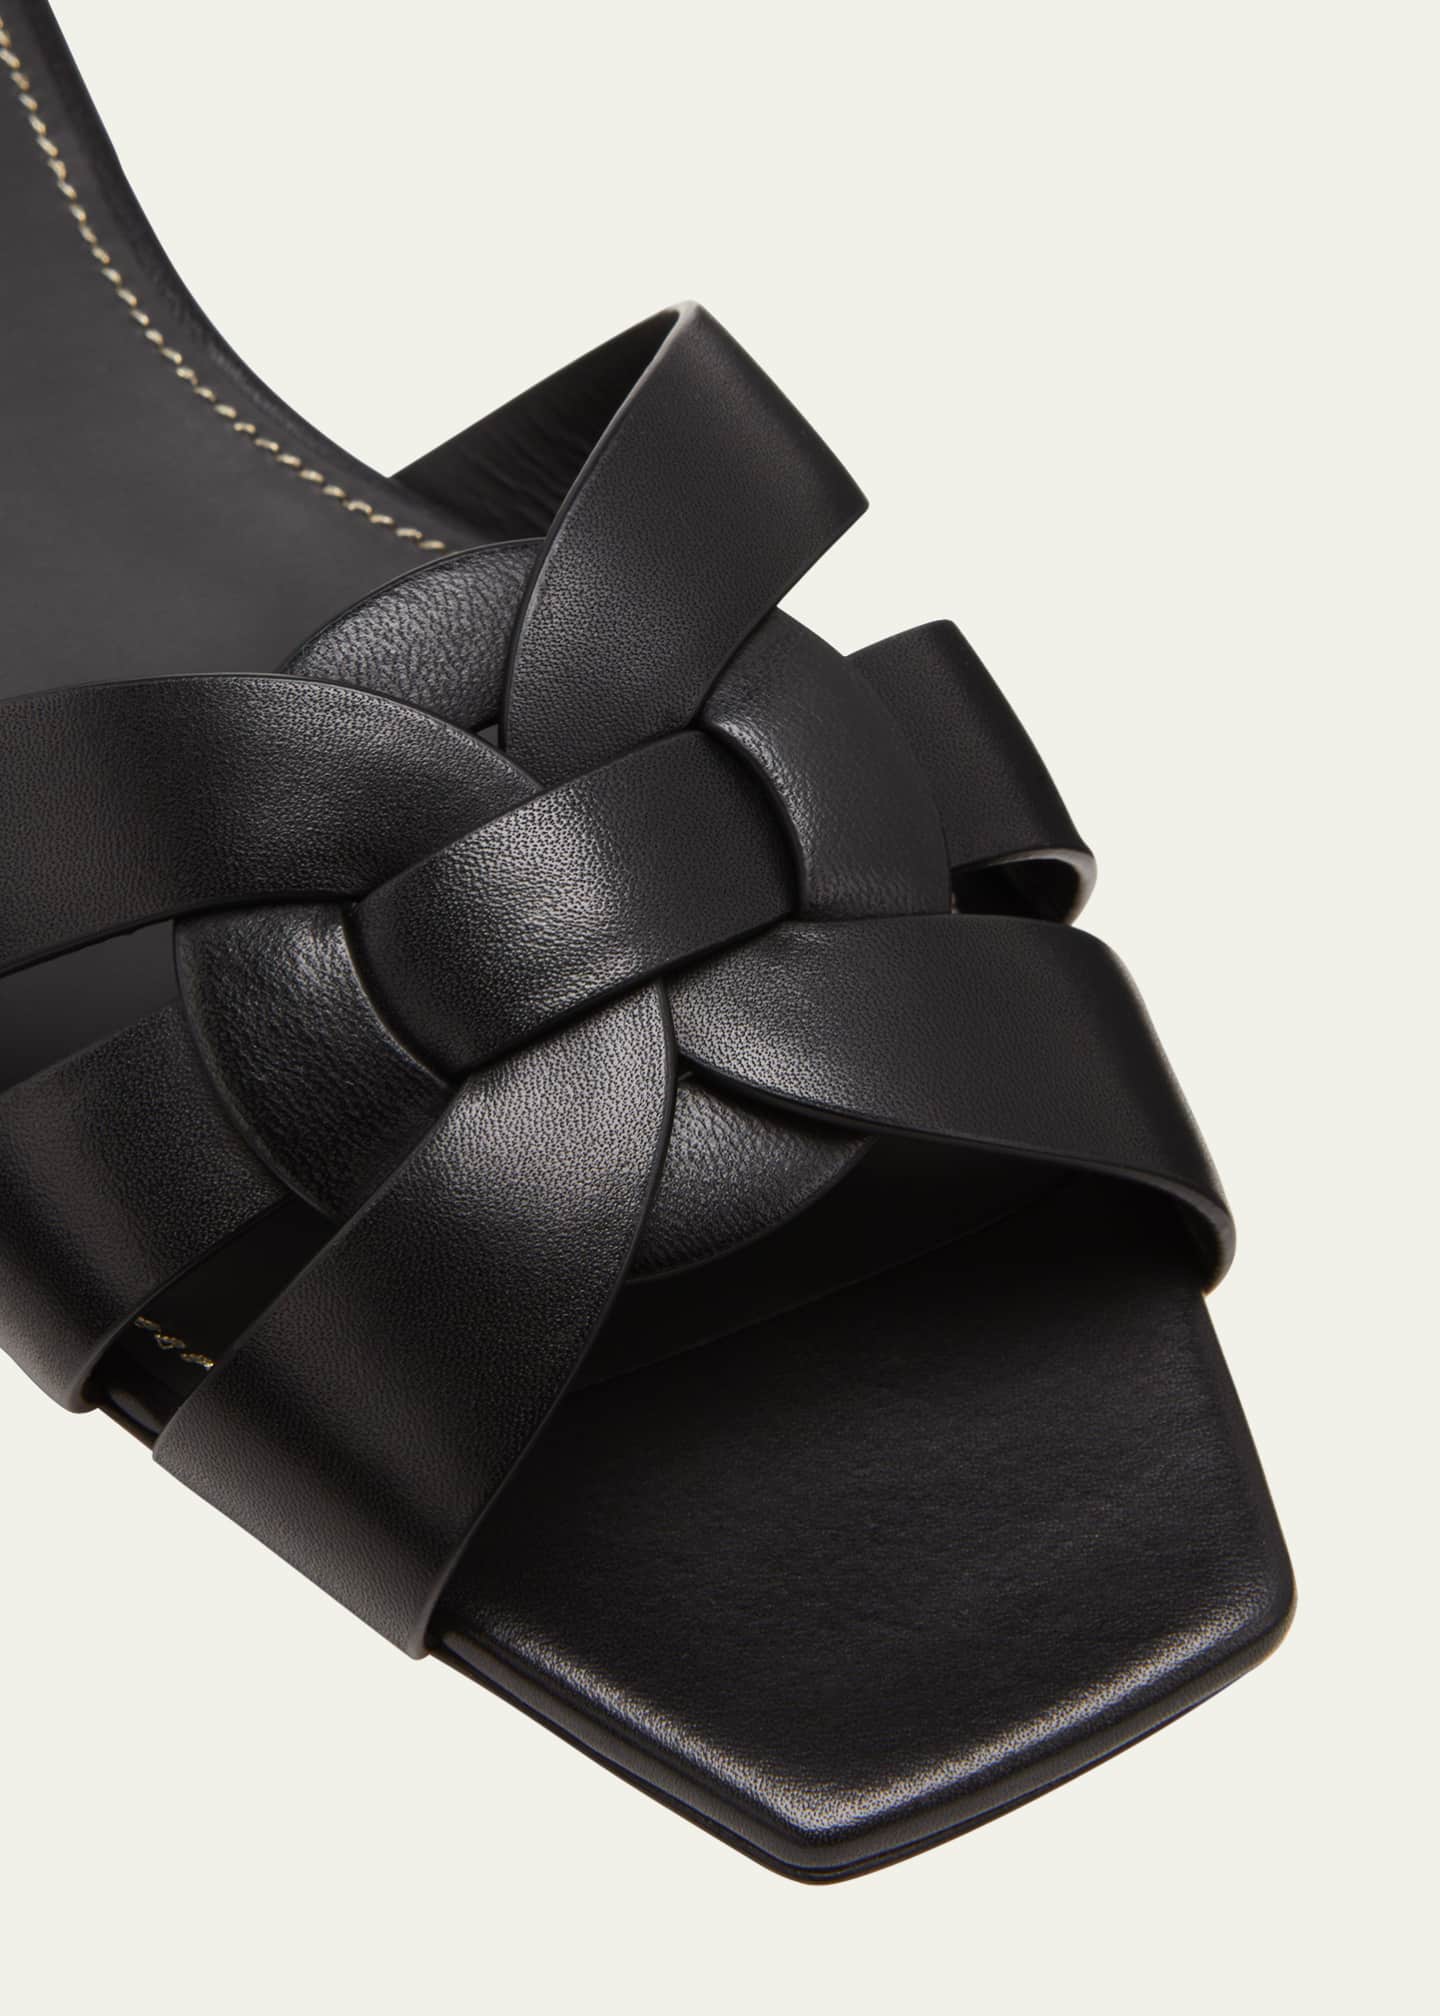 Saint Laurent Woven Leather Sandal Slide - Bergdorf Goodman